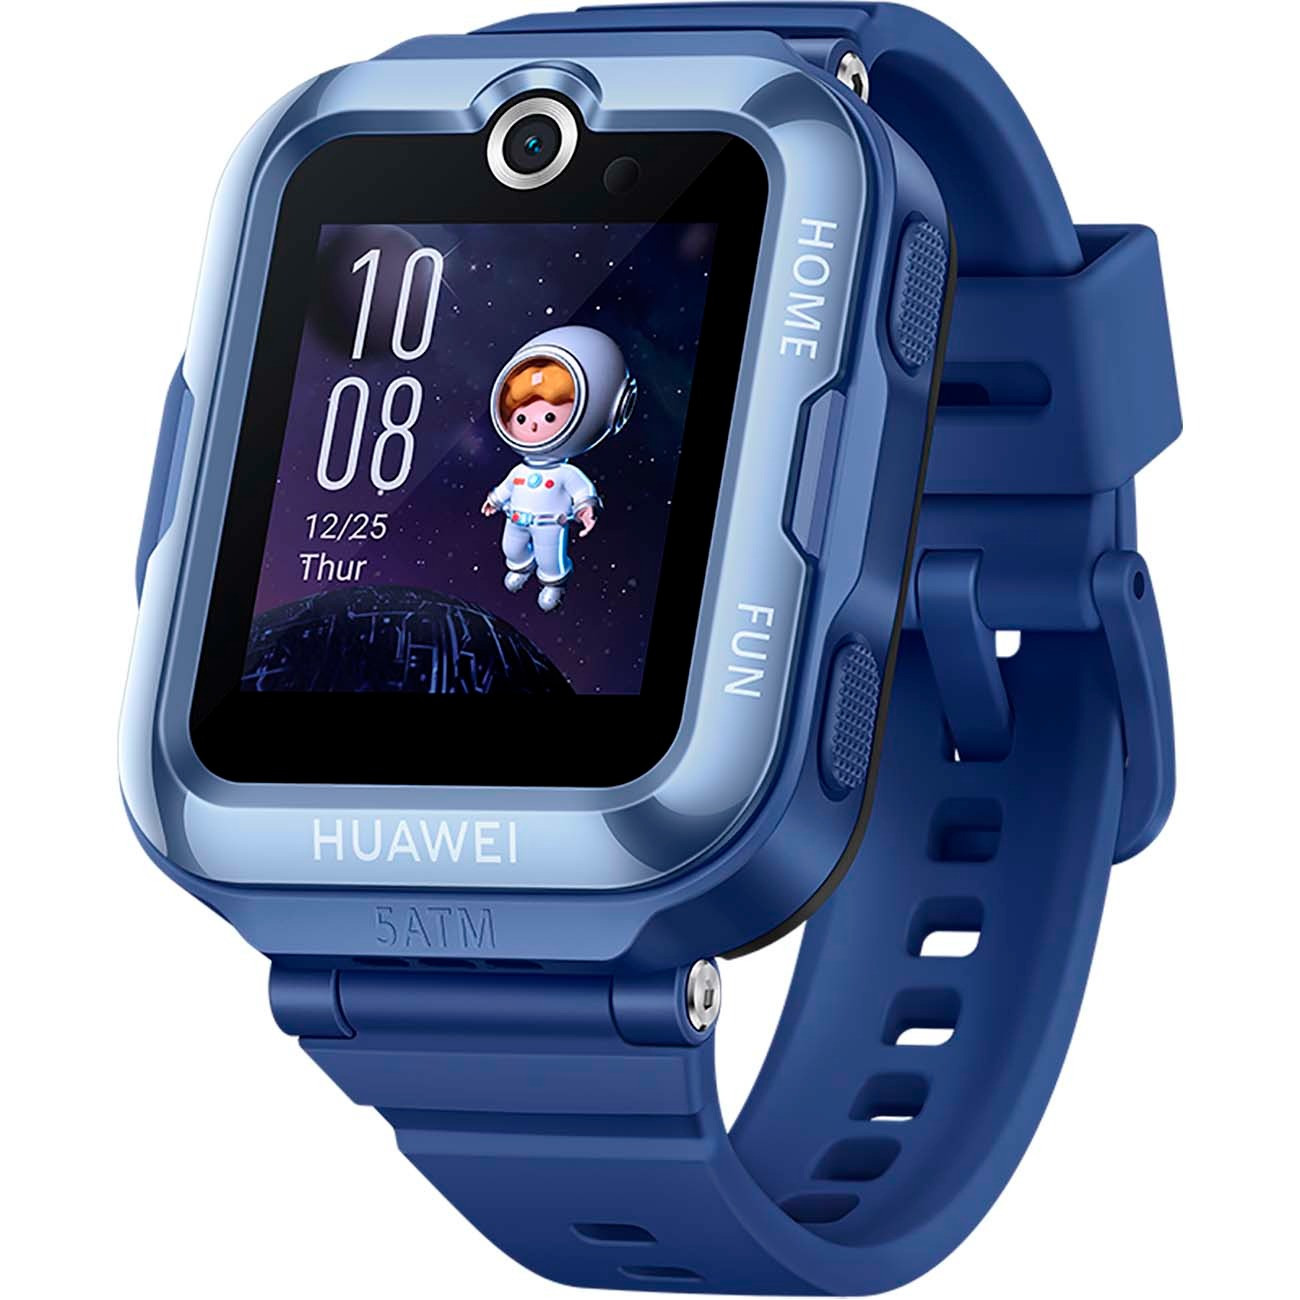 Часы с GPS трекером HUAWEI Watch Kids 4 Pro Blue (ASN-AL10)